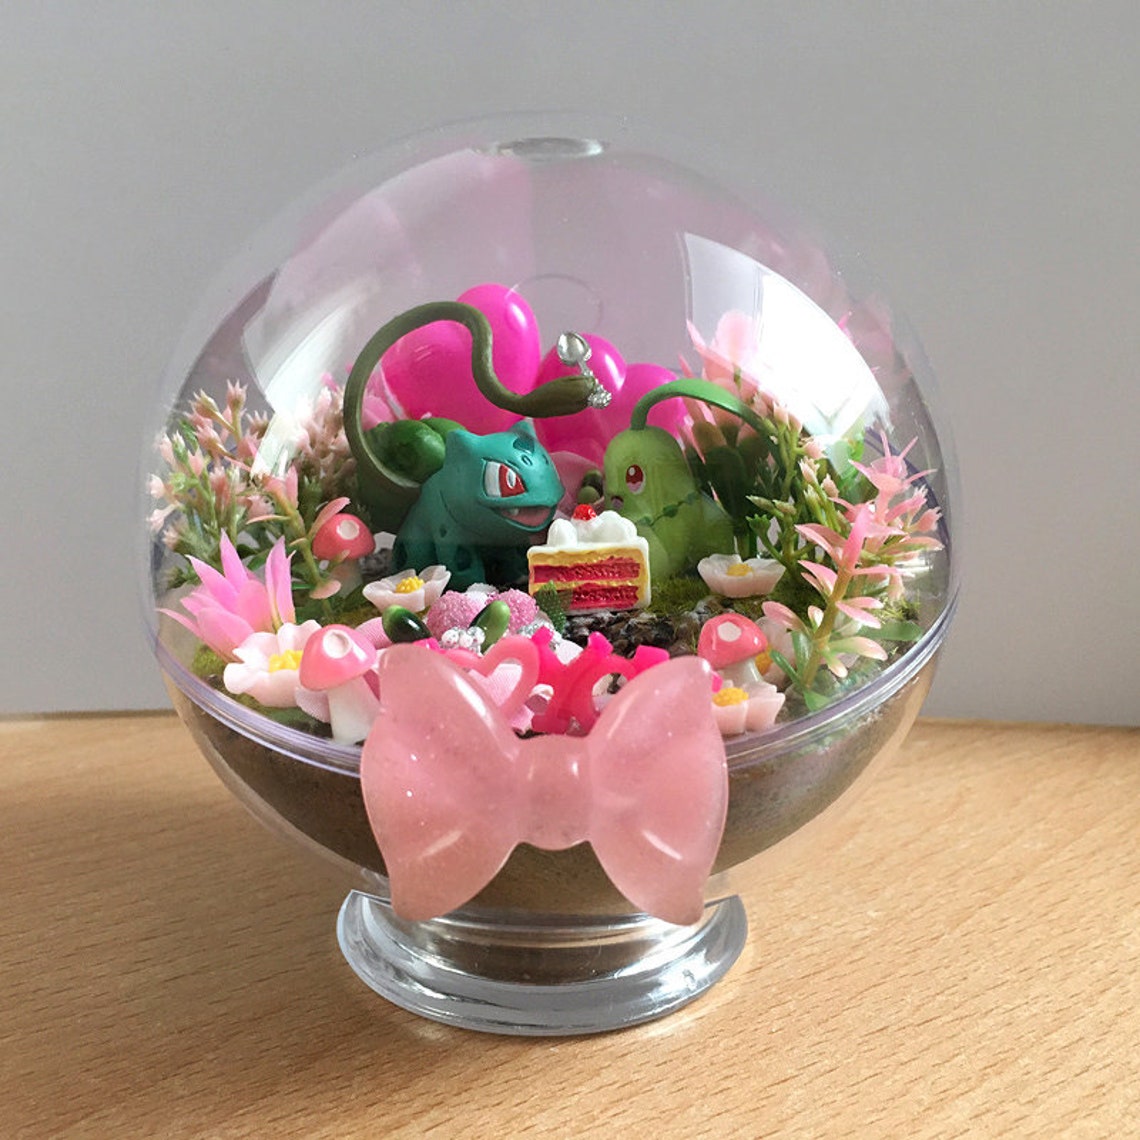 Bulbasaur Chikorita Pokemon Diorama / 10cm valentine's day image 0